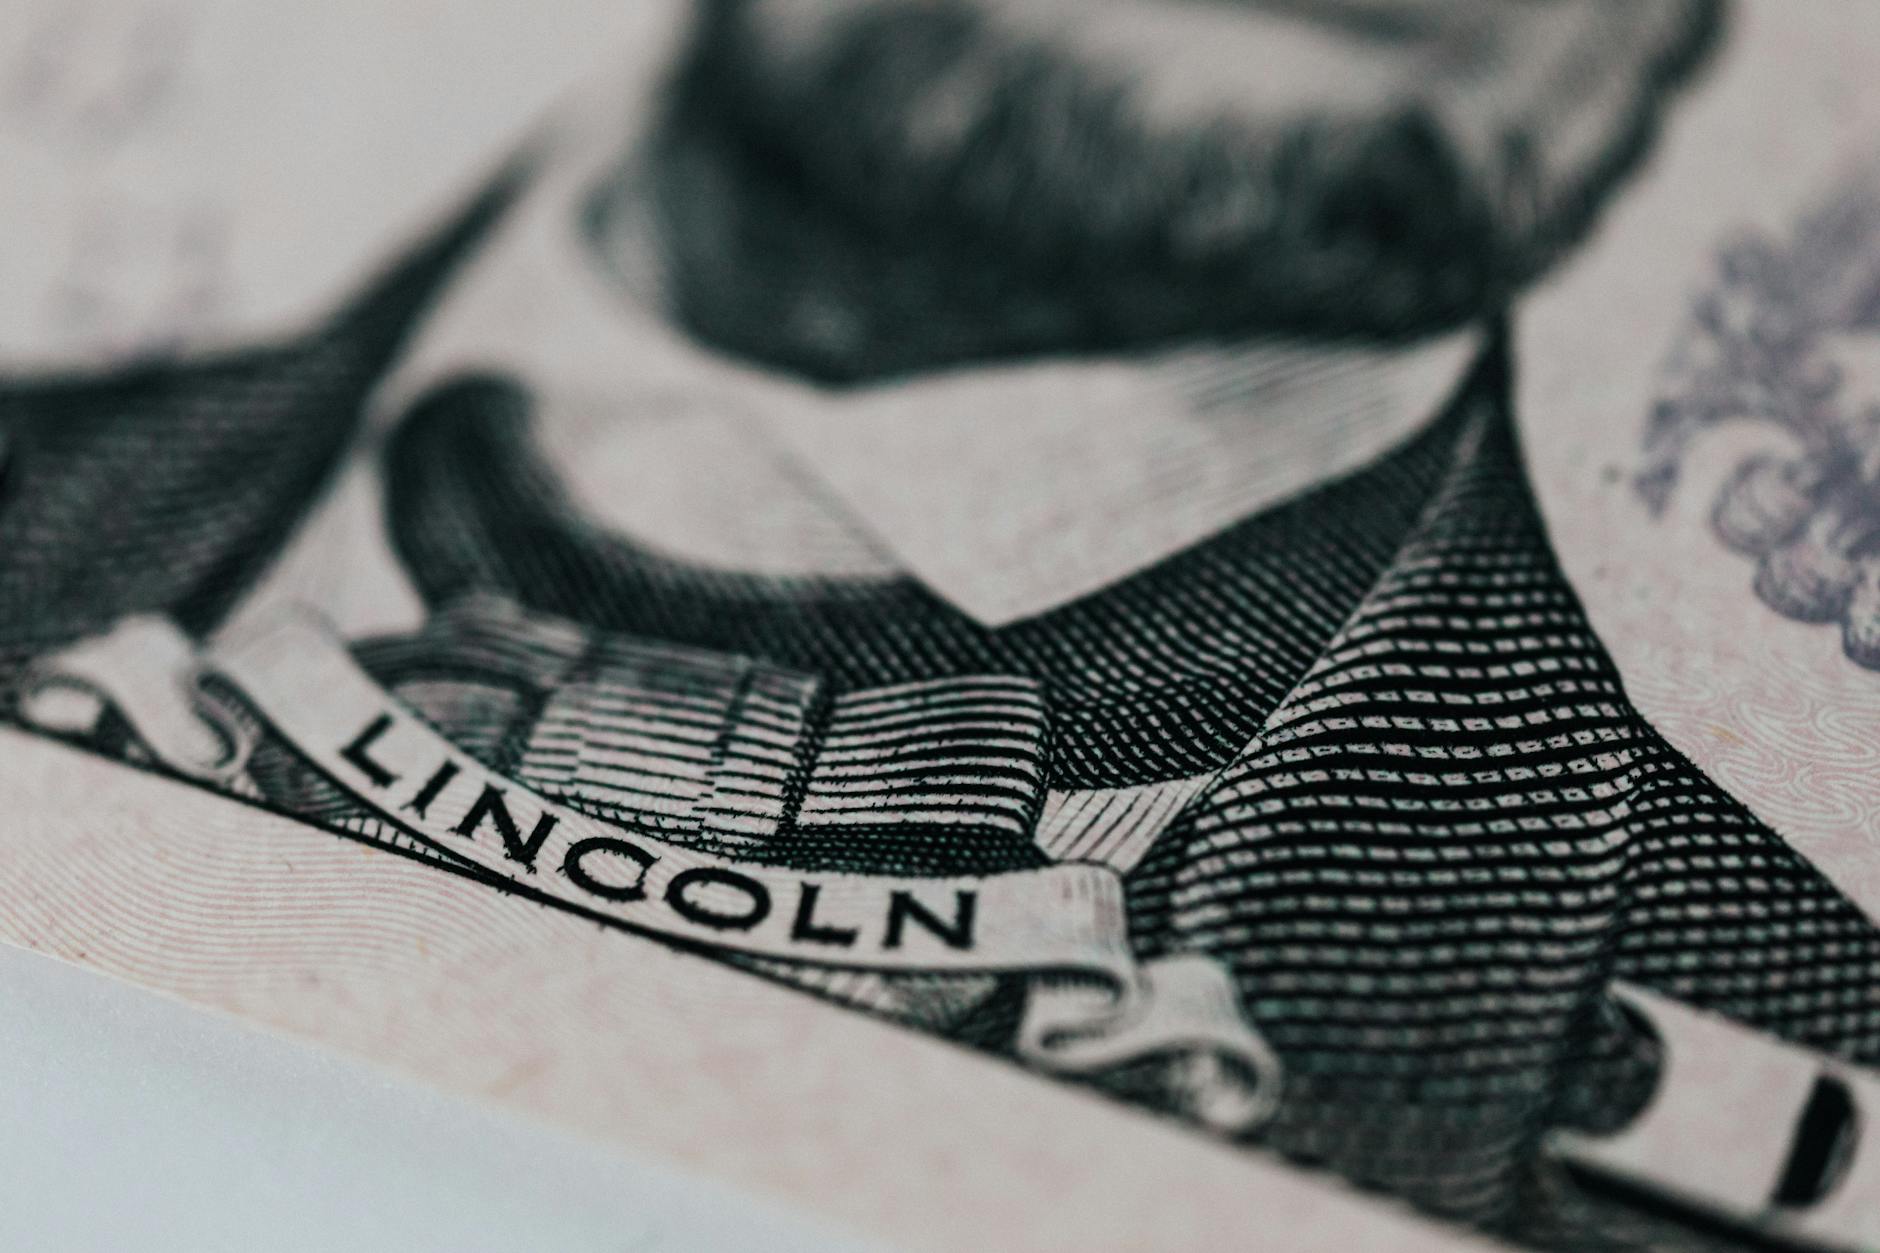 Kostenloses Stock Foto zu amerika, anzug, banknote